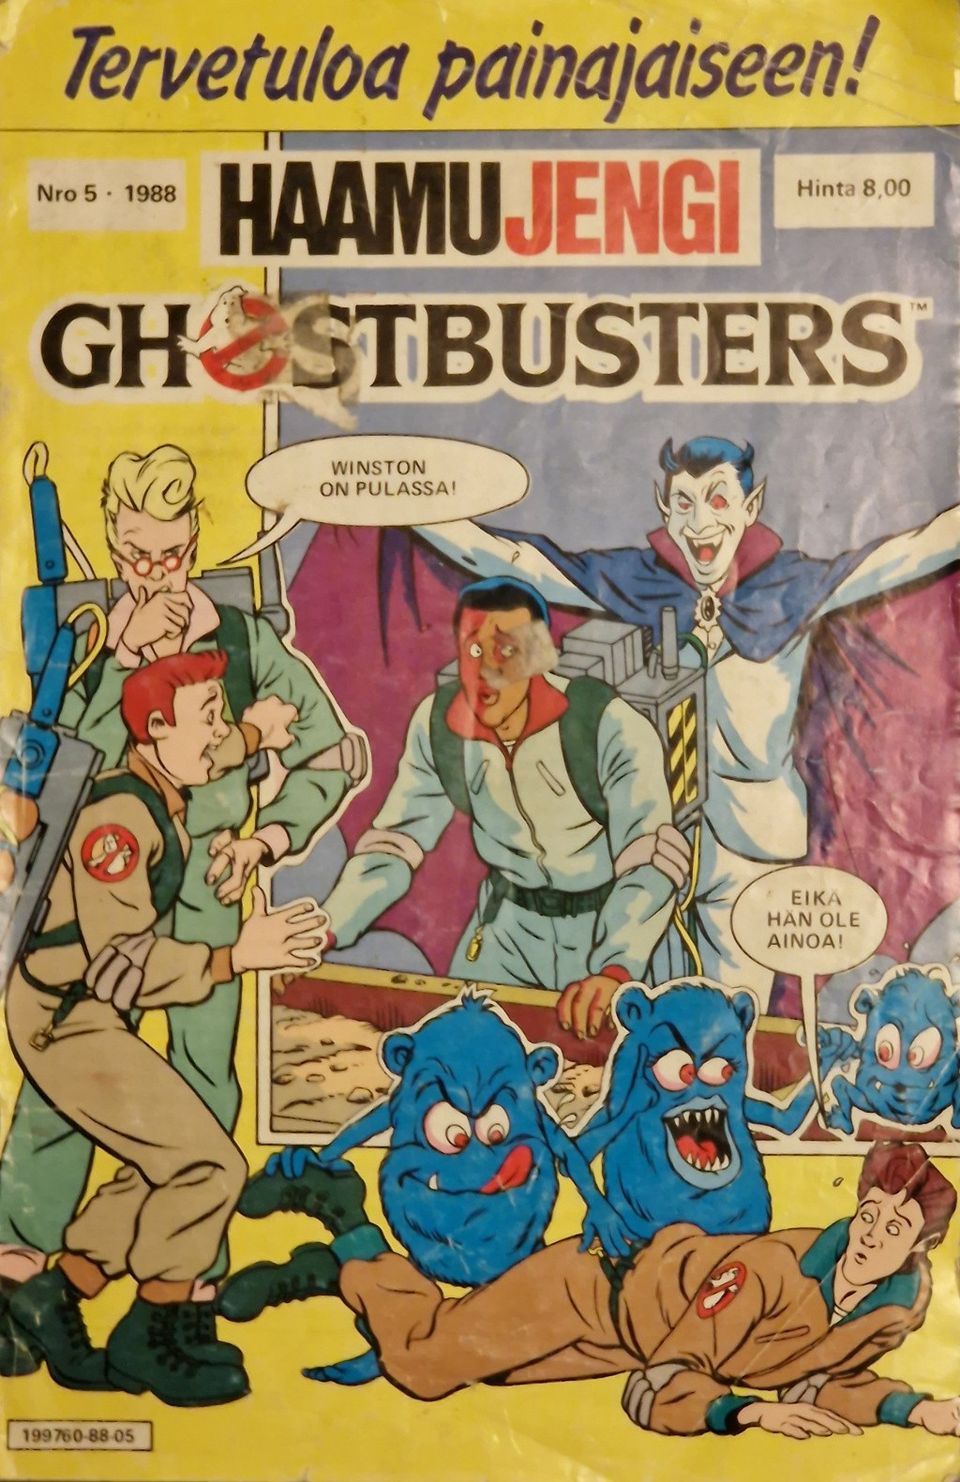 Ghostbusters ym sarjakuvia